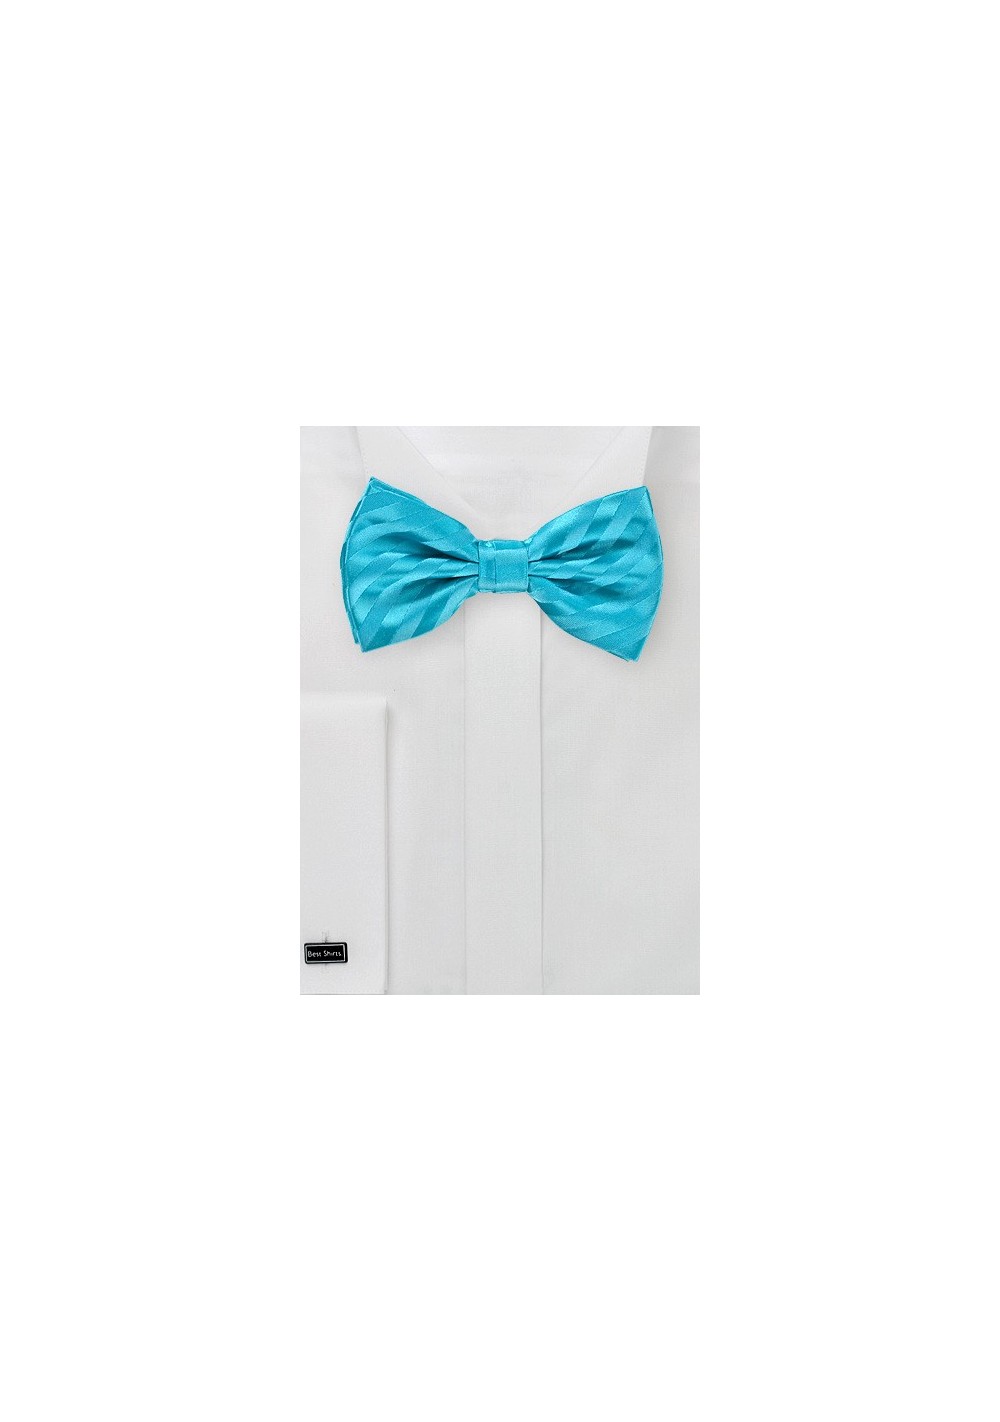 Aqua Blue Striped Bow Tie